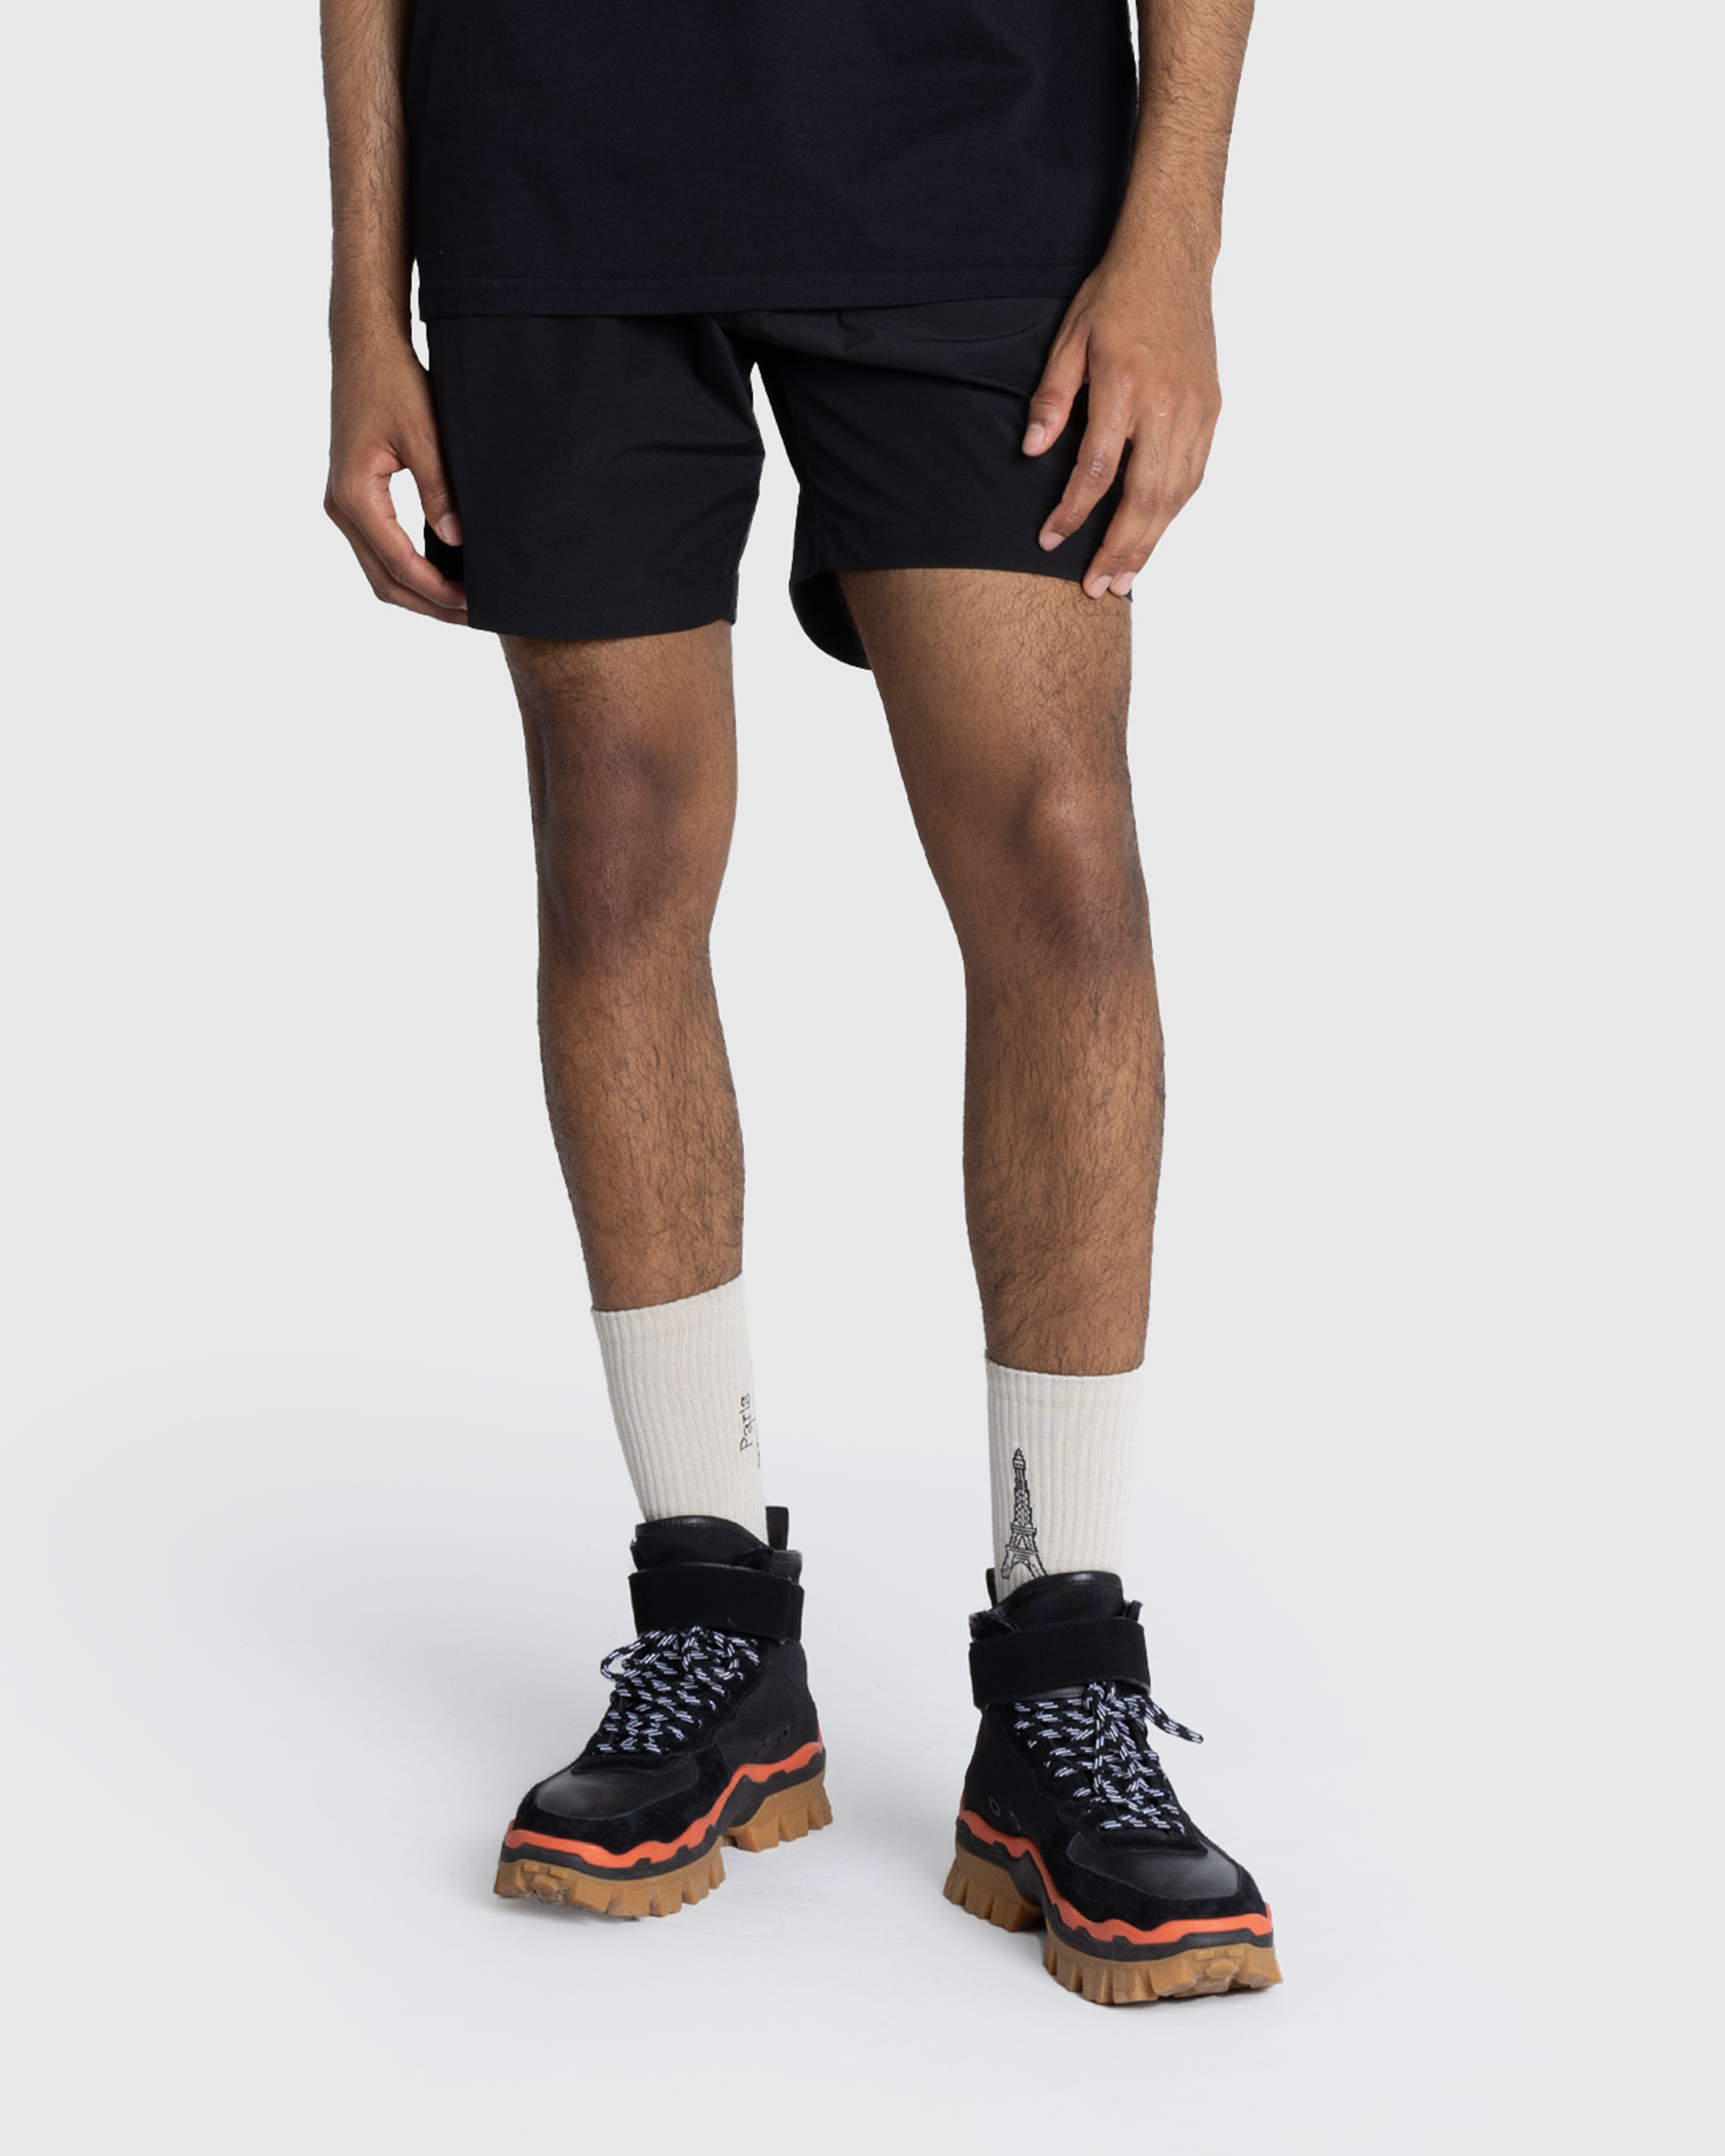 Highsnobiety – Not In Paris Nylon Shorts Black  - Bermuda Cuts - Black - Image 2